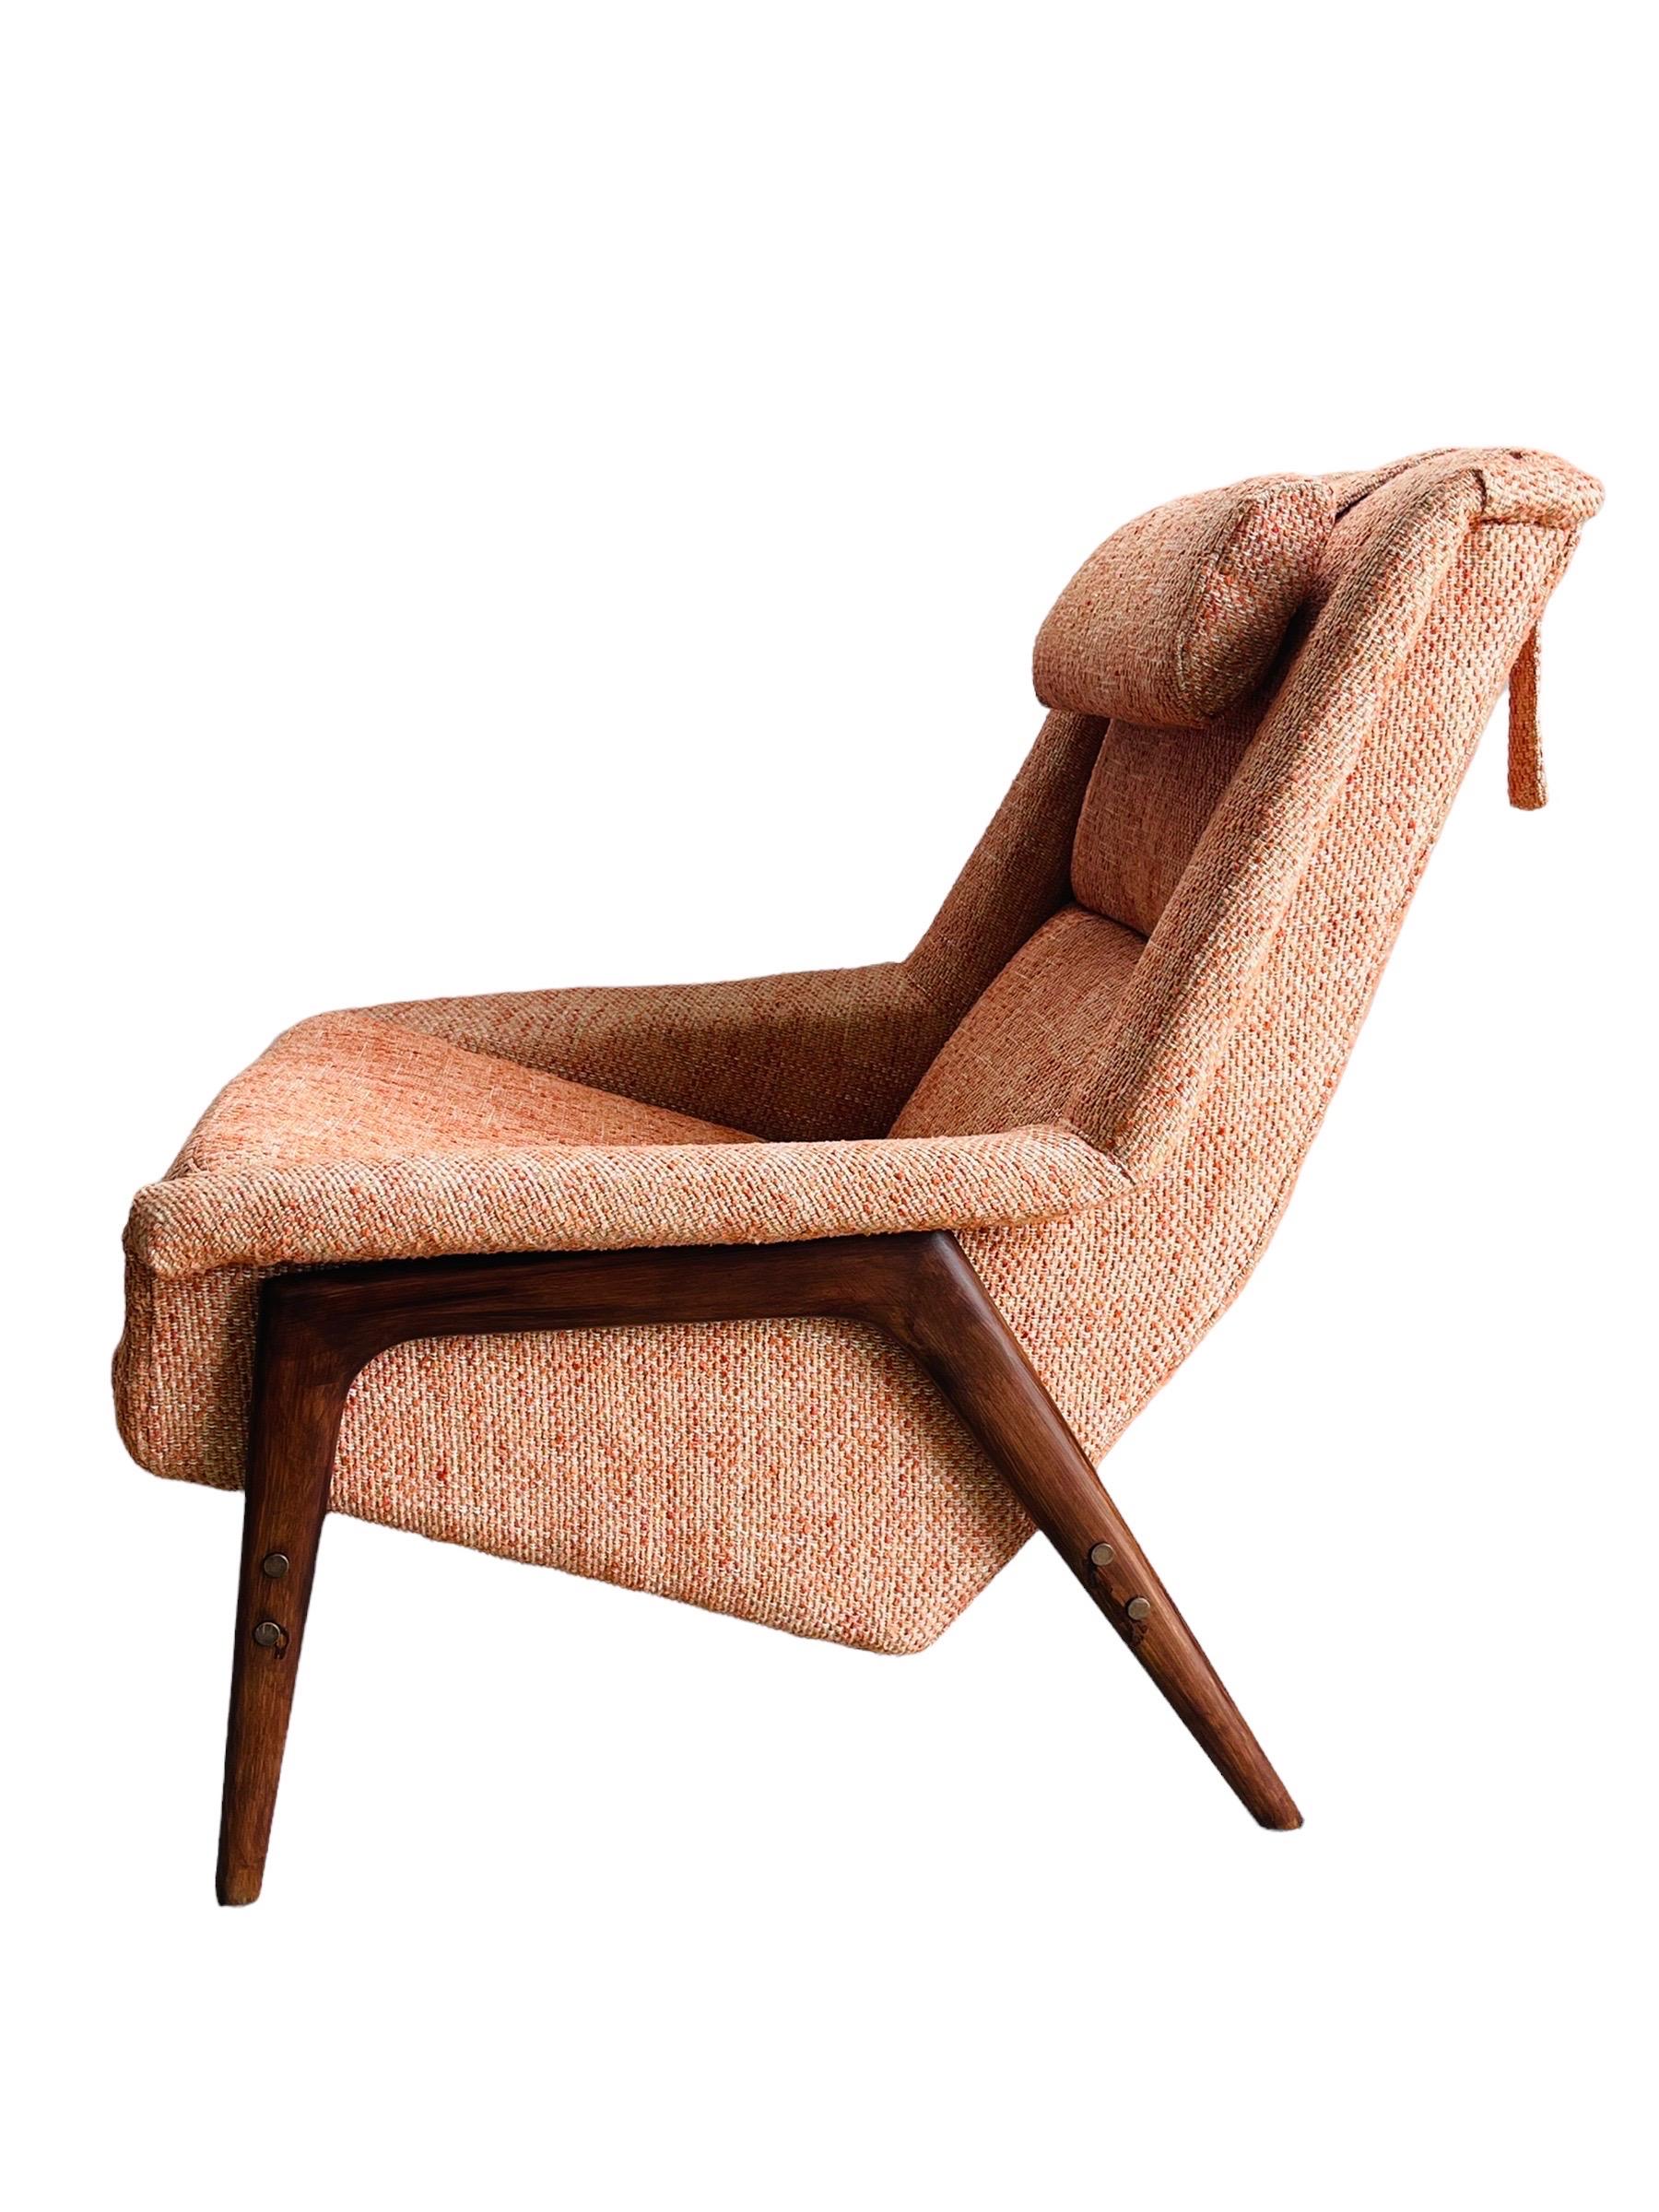 Fabric Folke Ohlsson Walnut Lounge Chair & Ottoman for DUX